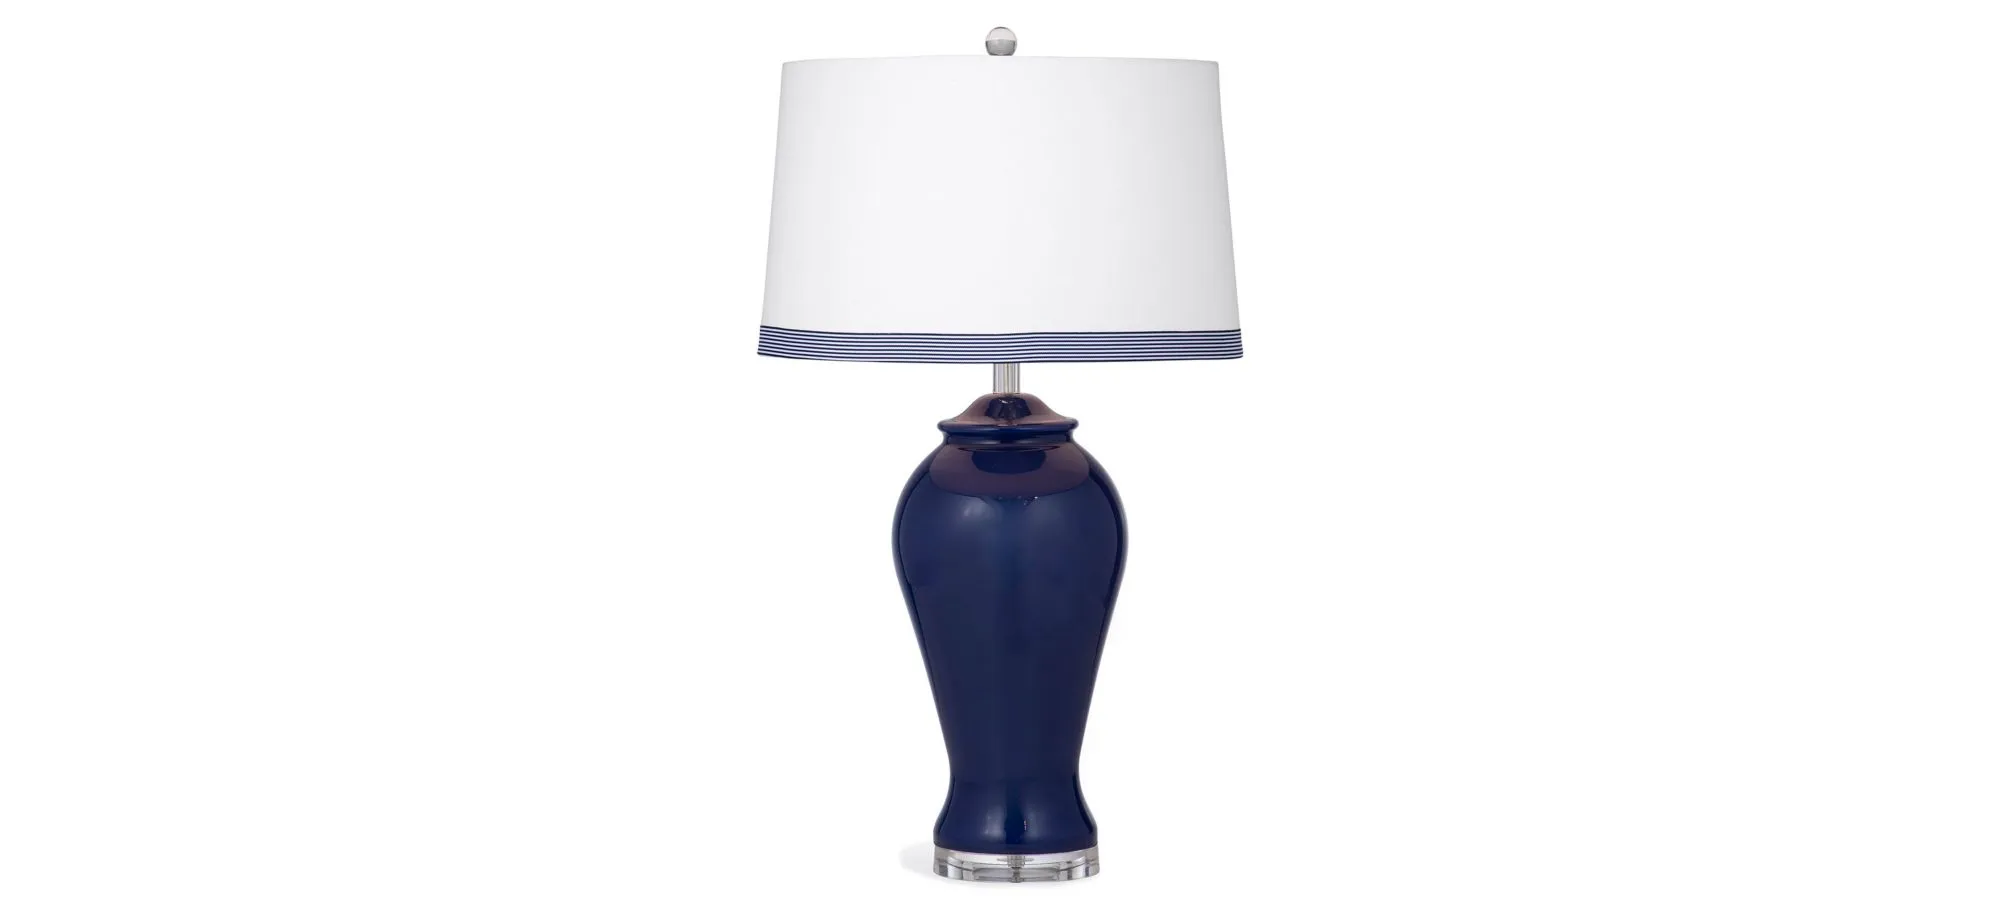 Hastings Table Lamp in Navy Blue by Bassett Mirror